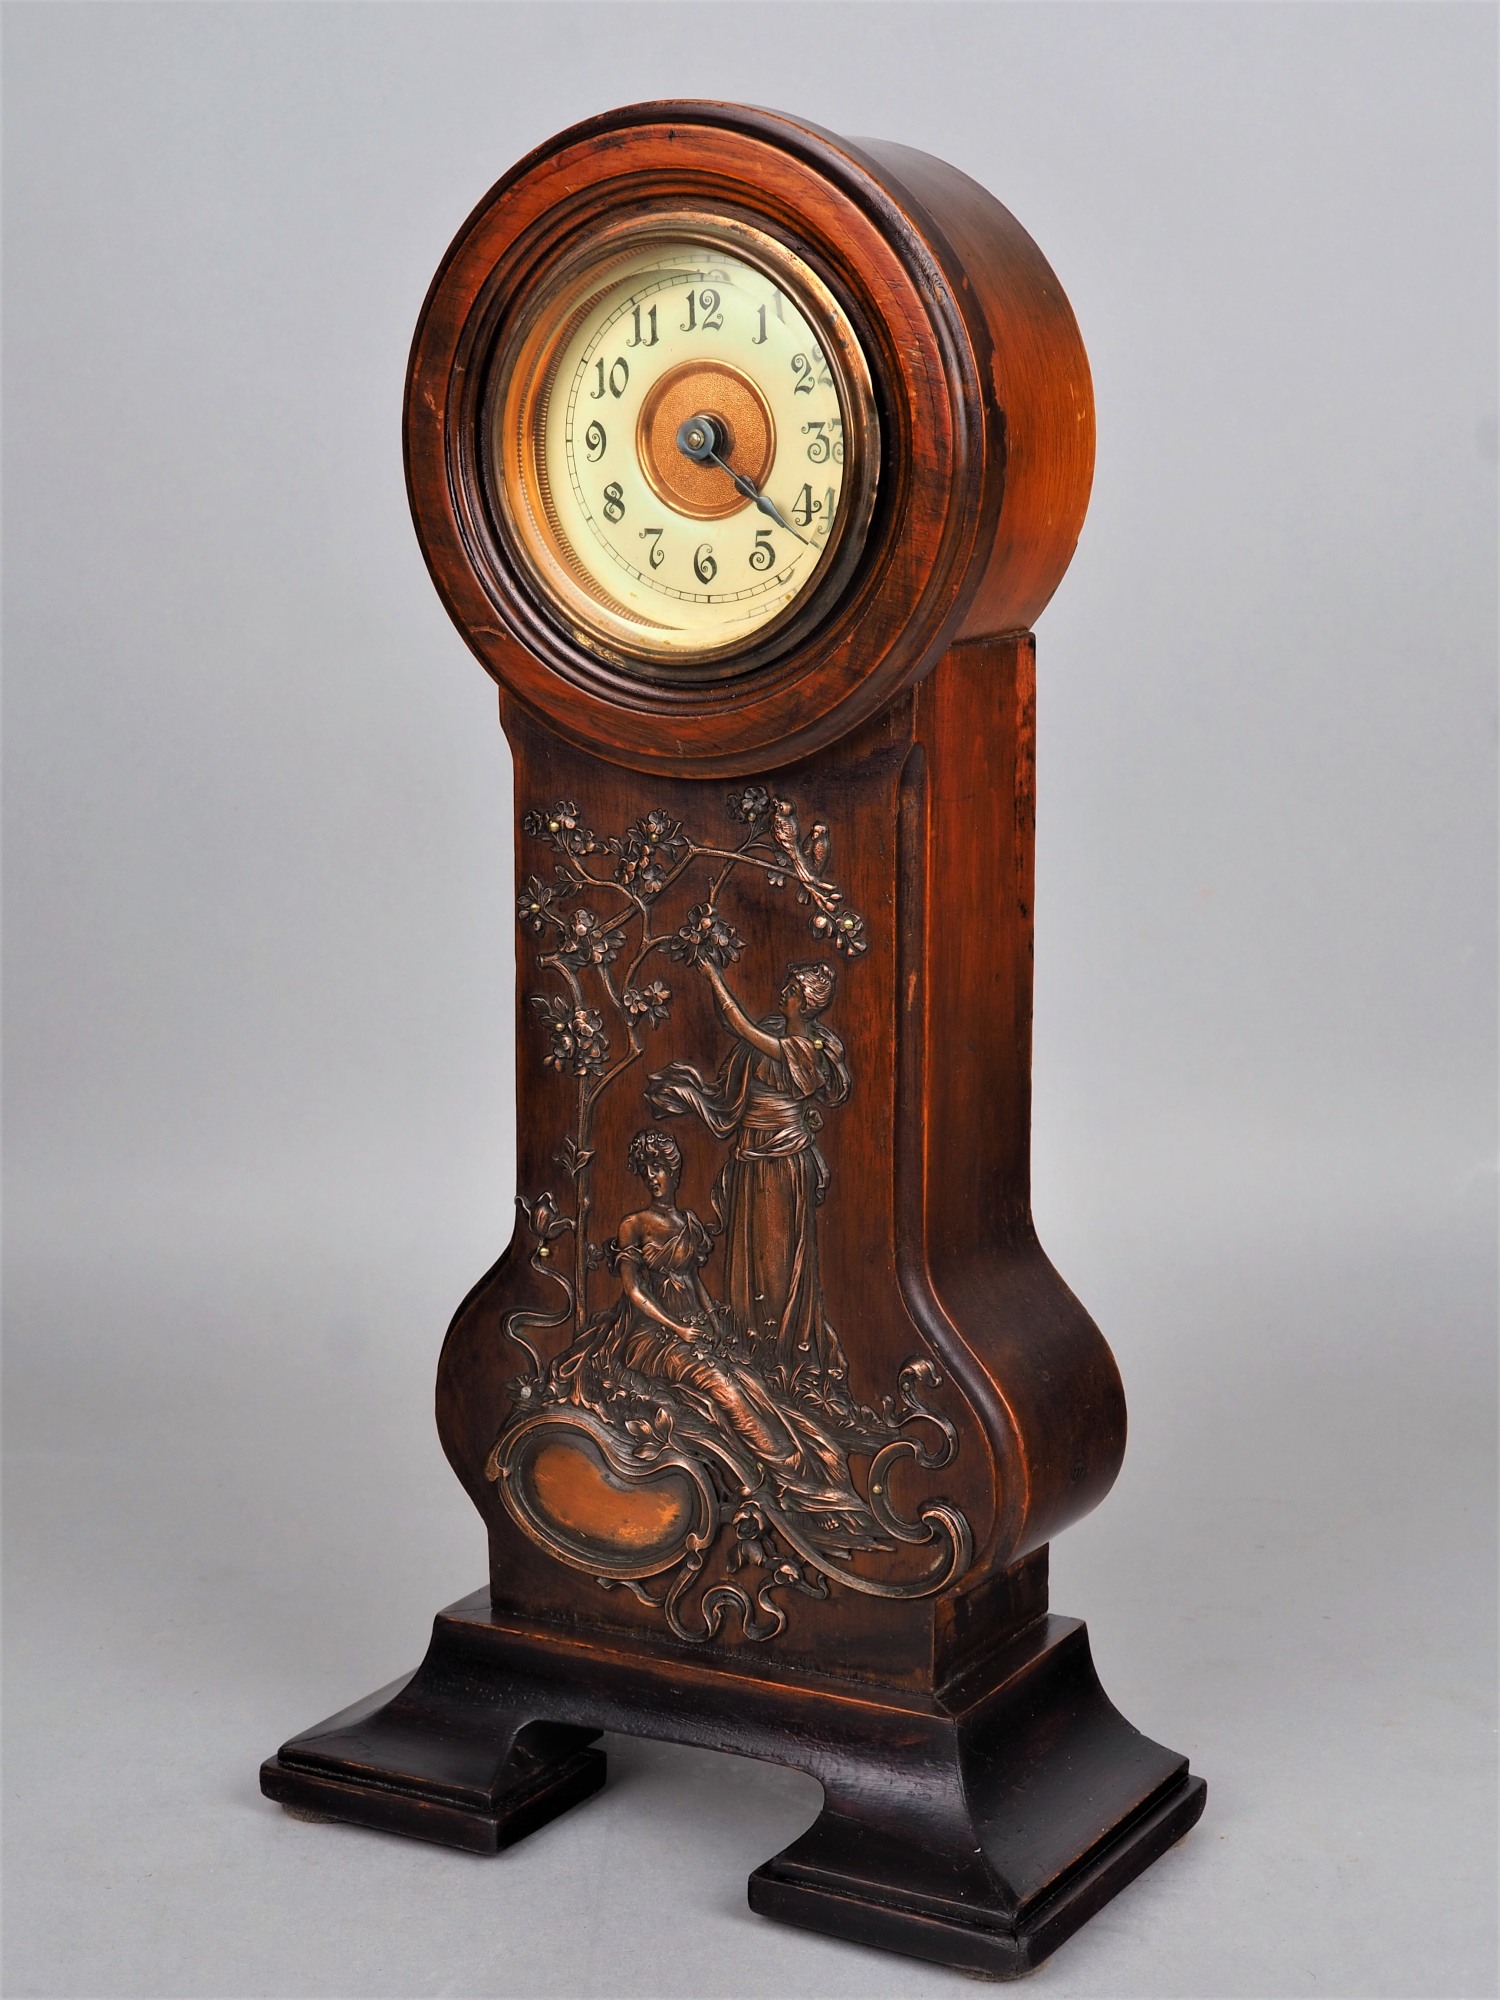 Miniature grandfather clock "Junghans" around 1900